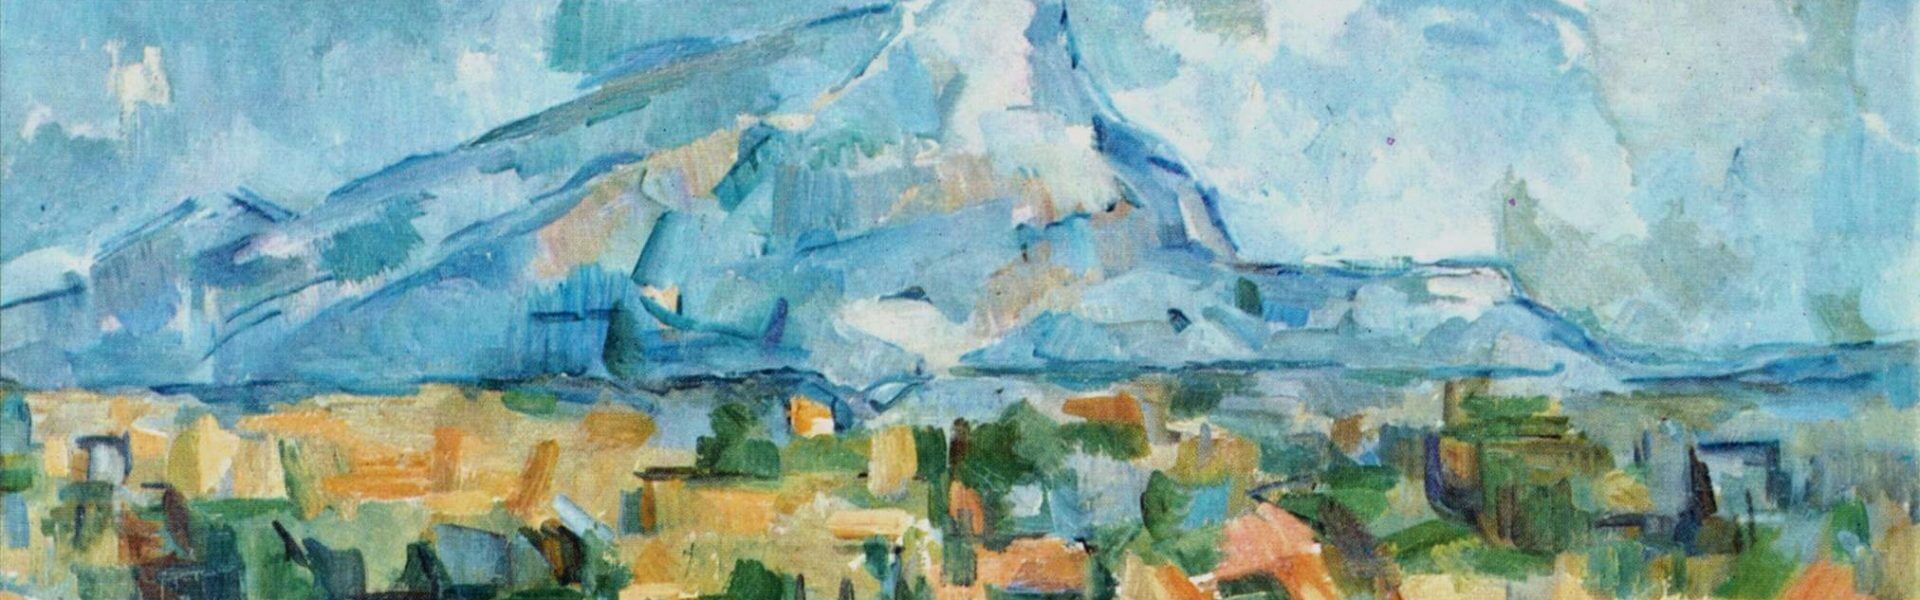 Paul Cézanne, Public domain, via Wikimedia Commons